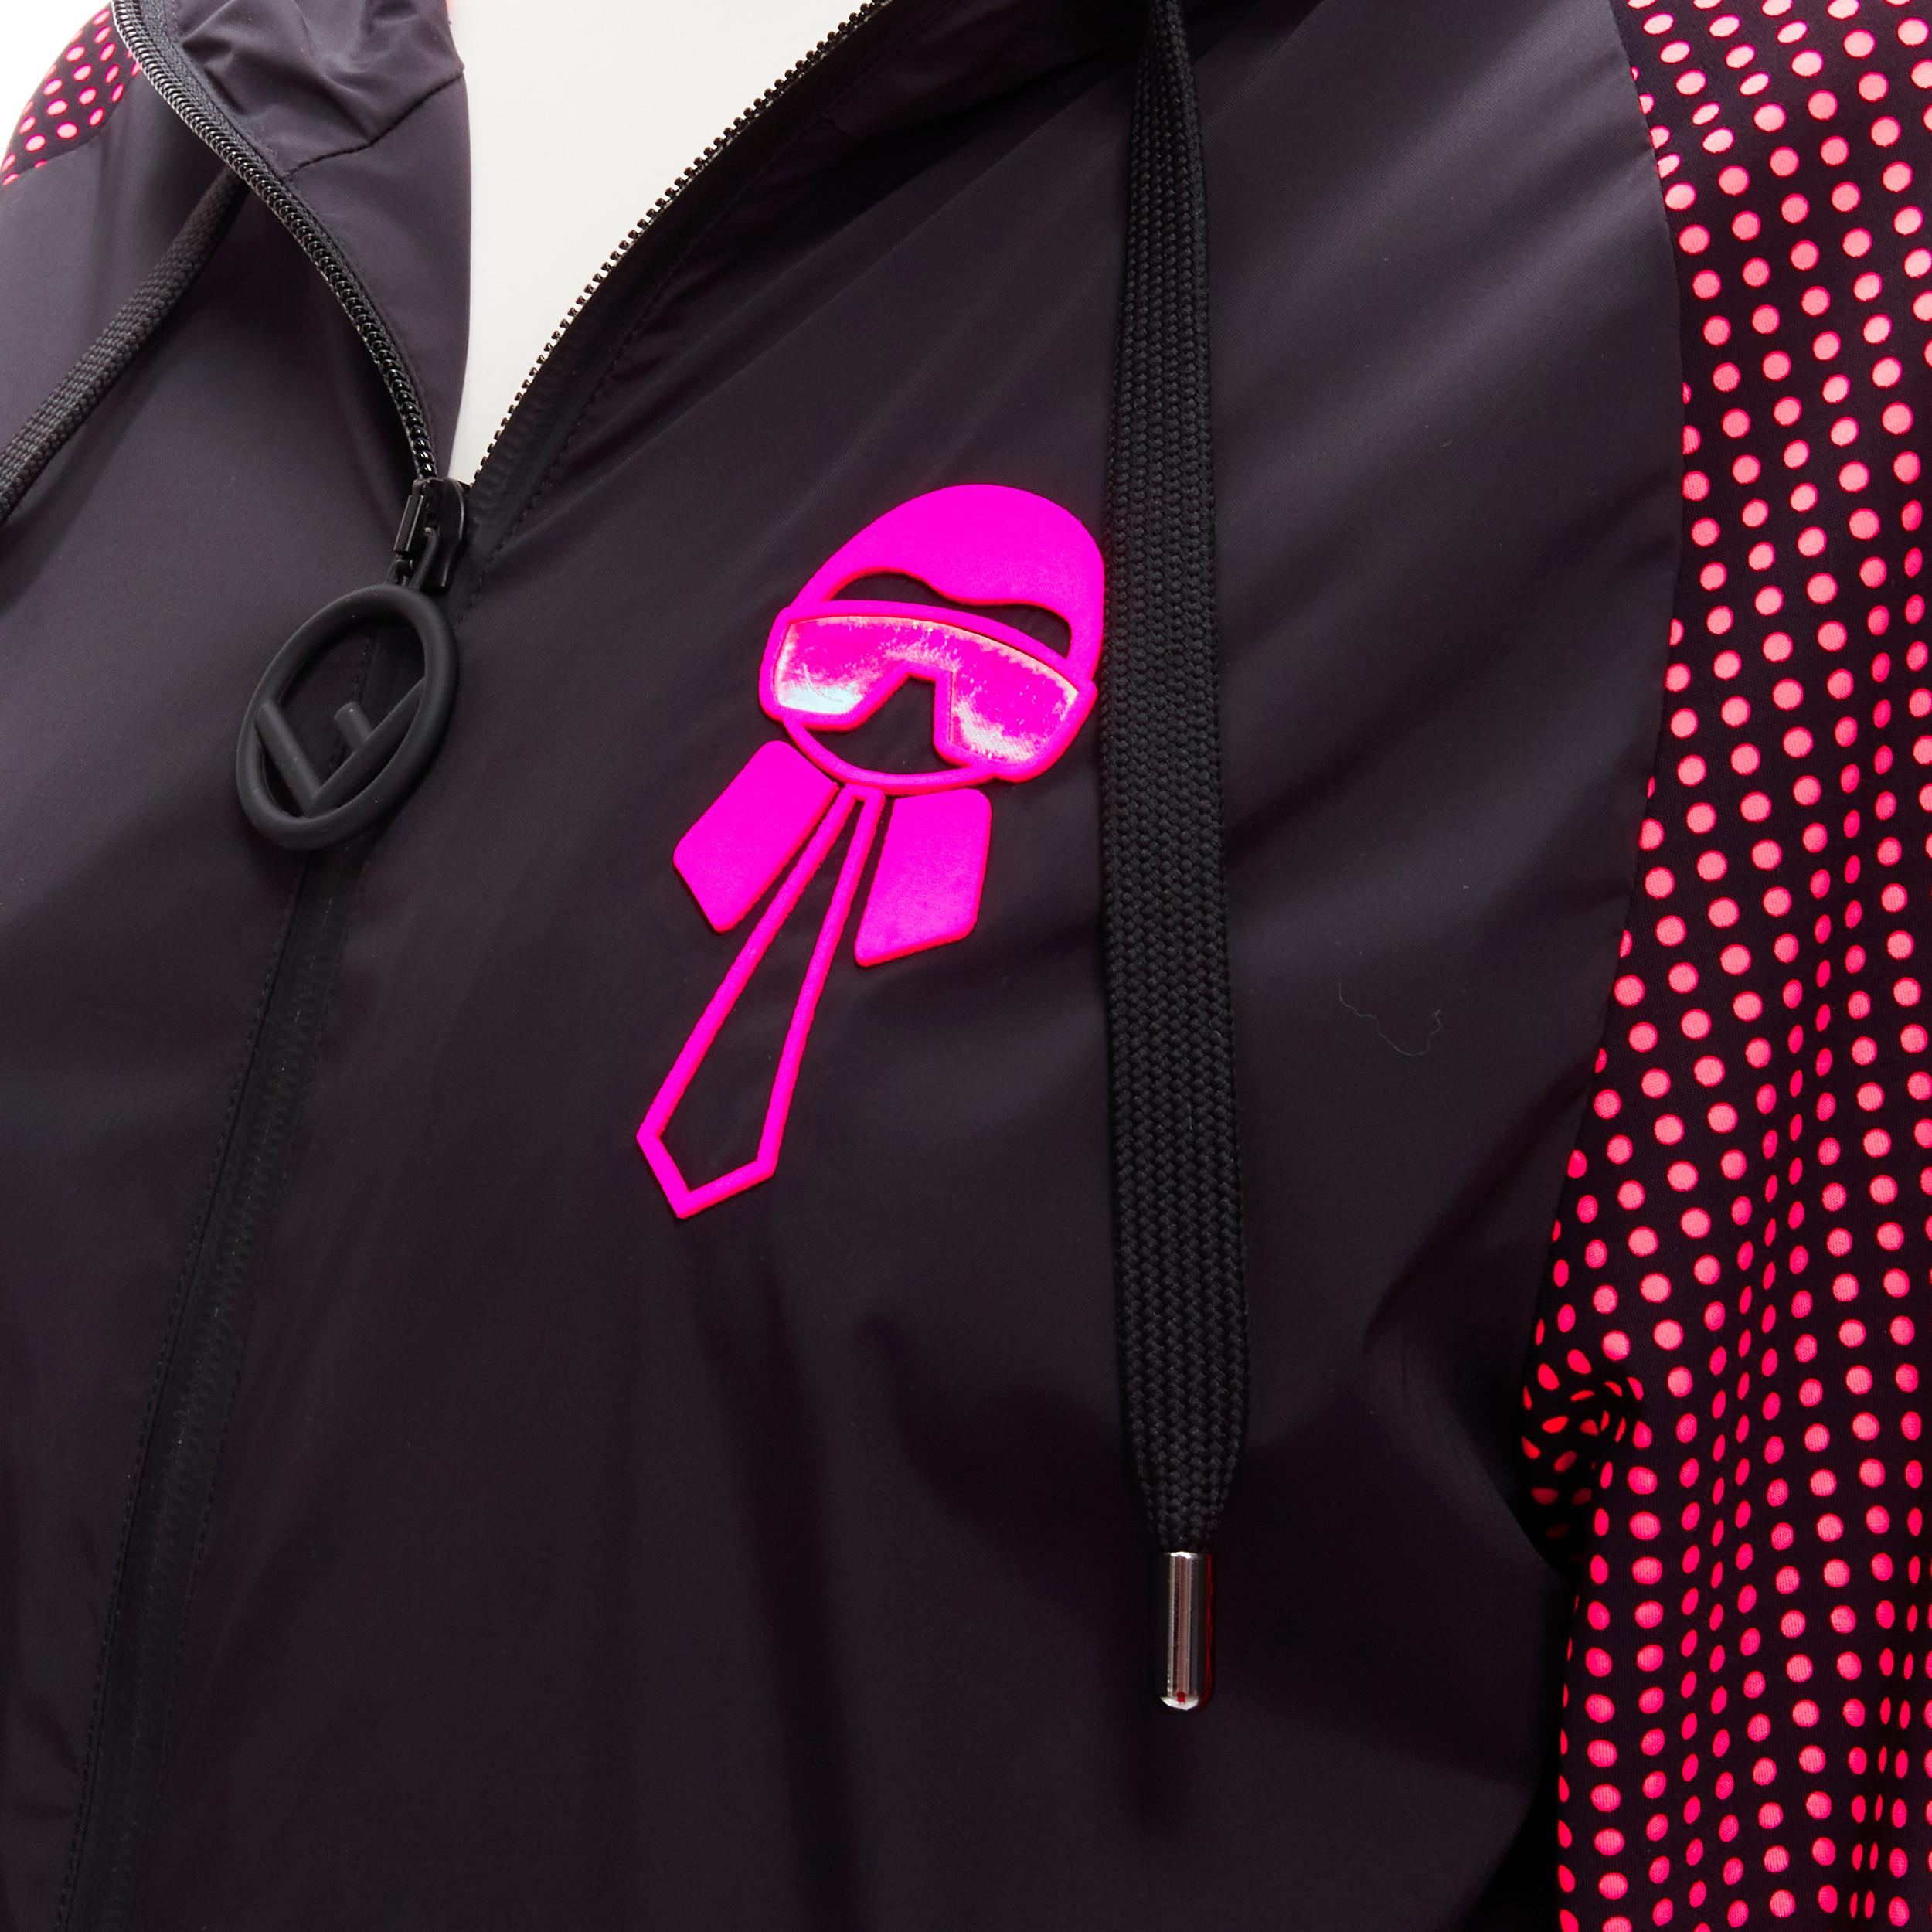 FENDI Karl Loves black pink polka dot nylon activewear windbreaker jacket 
Reference: ANWU/A00483 
Brand: Fendi 
Collection: Karl Loves 
Material: Nylon 
Color: Black
Pattern: Polka dot 
Closure: Zip 
Extra Detail: Karl with holographic sunglasses